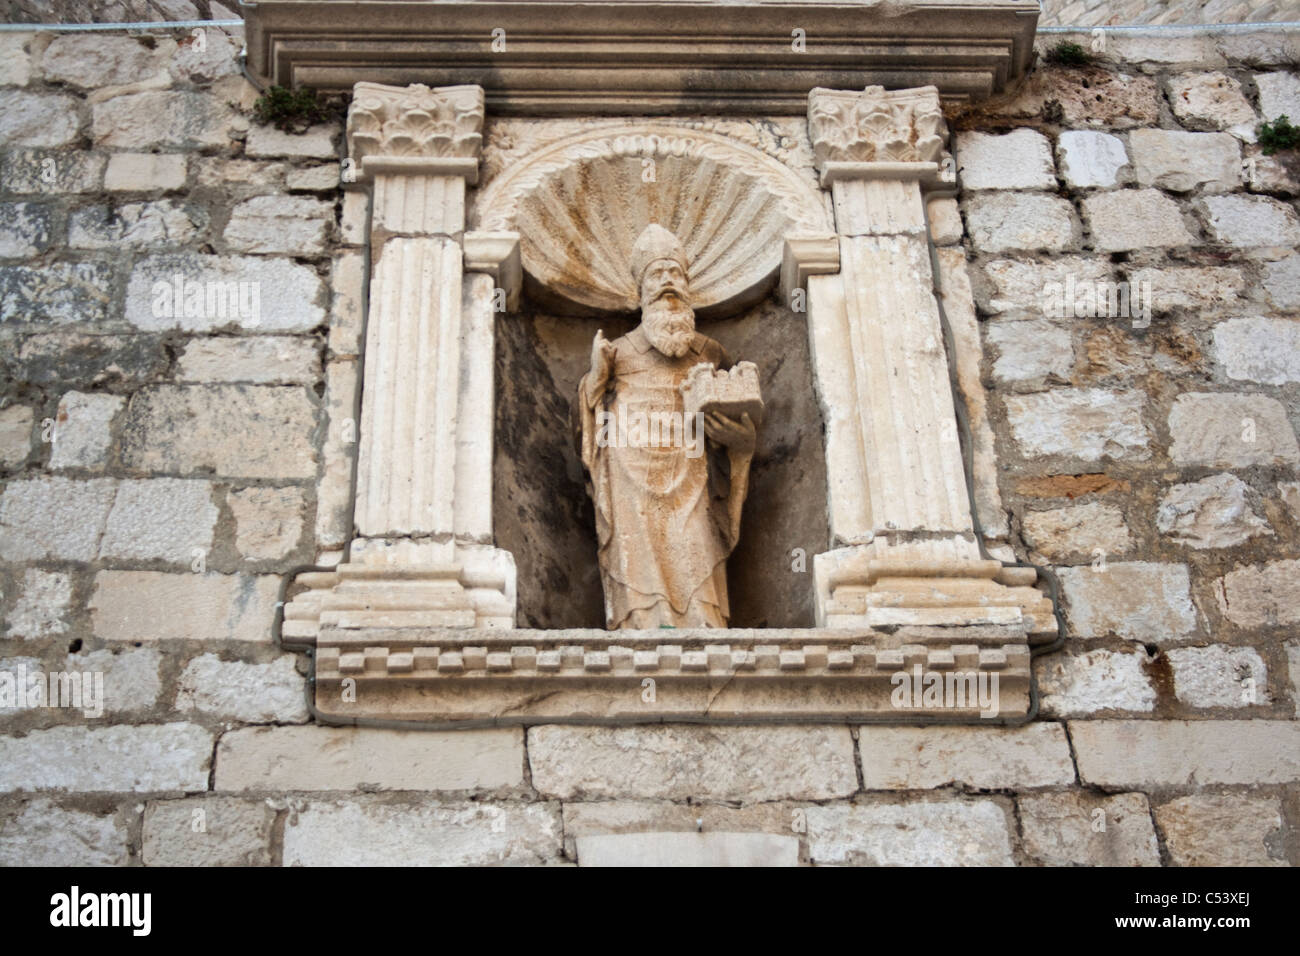 Croatia, Dubrovnik: Sculpture of Saint Blaise the patron of Dubrovnik on a wall Stock Photo